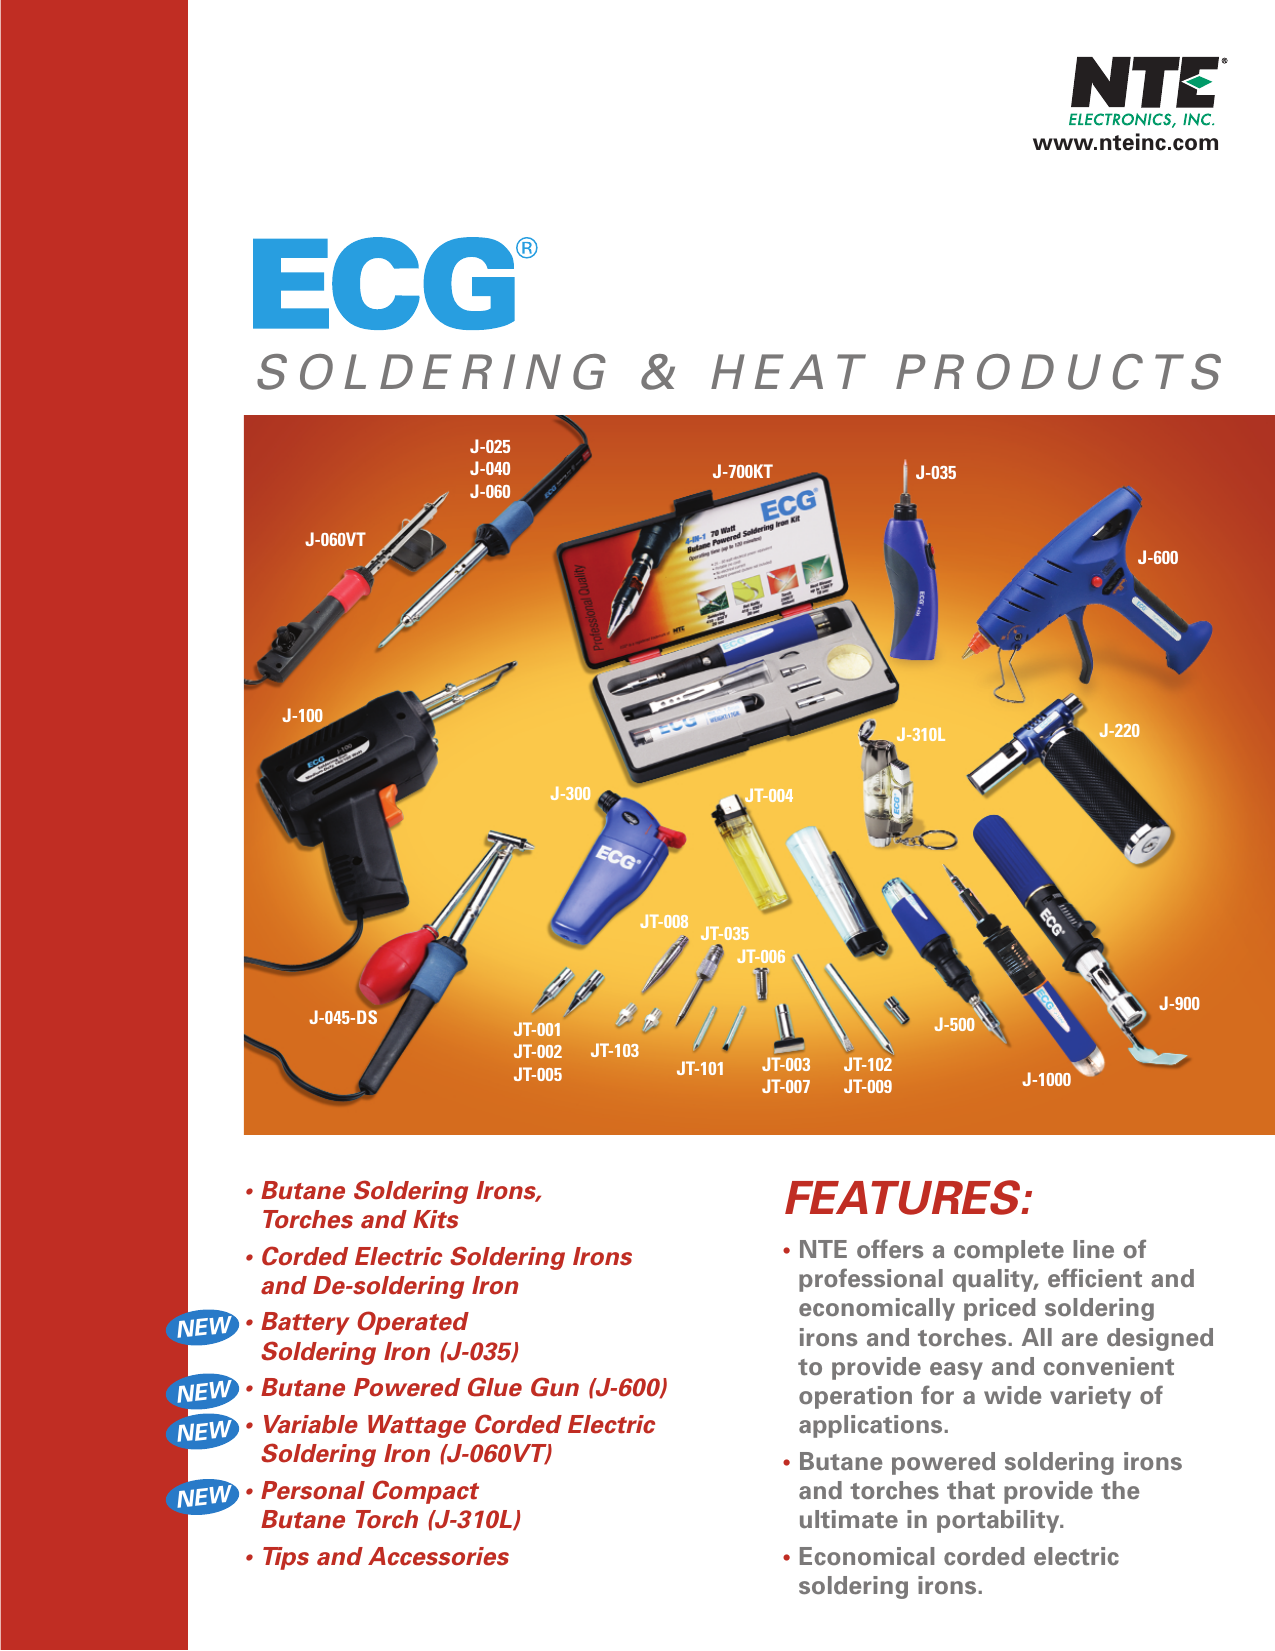 ECG JT-006 Heat Blower for J-1000 Butane Soldering Iron NTE Electronics Inc. 